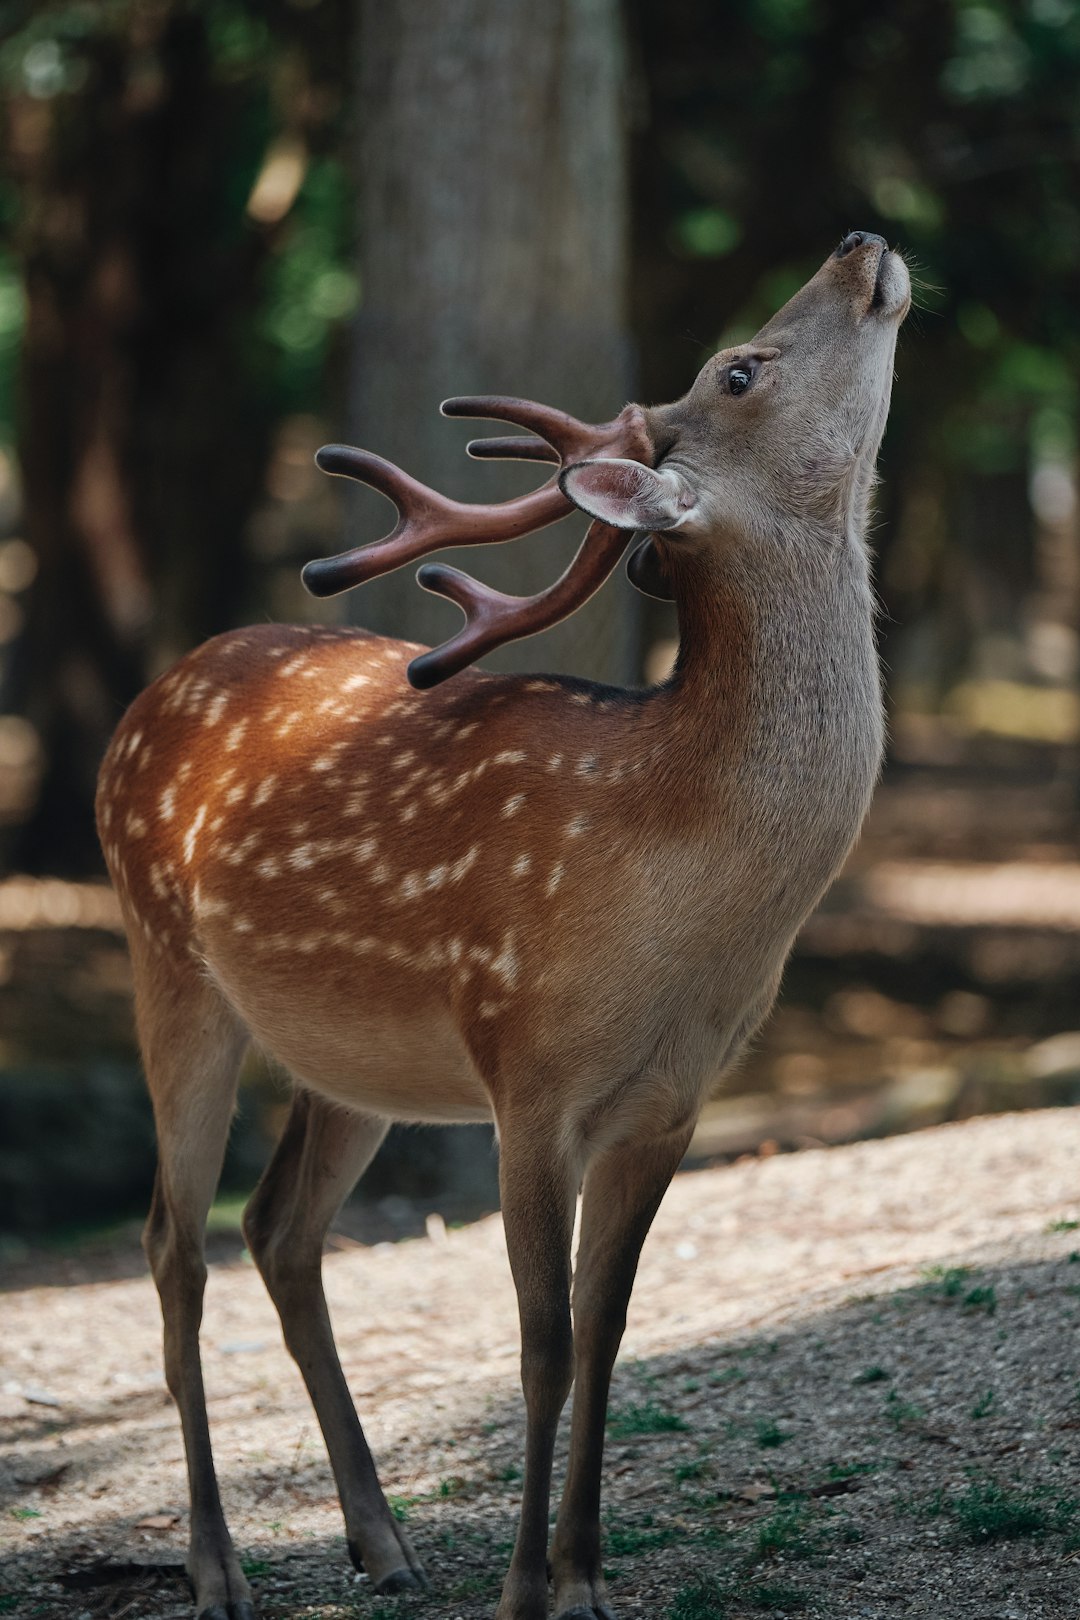 travelers stories about Wildlife in Nara, Japan